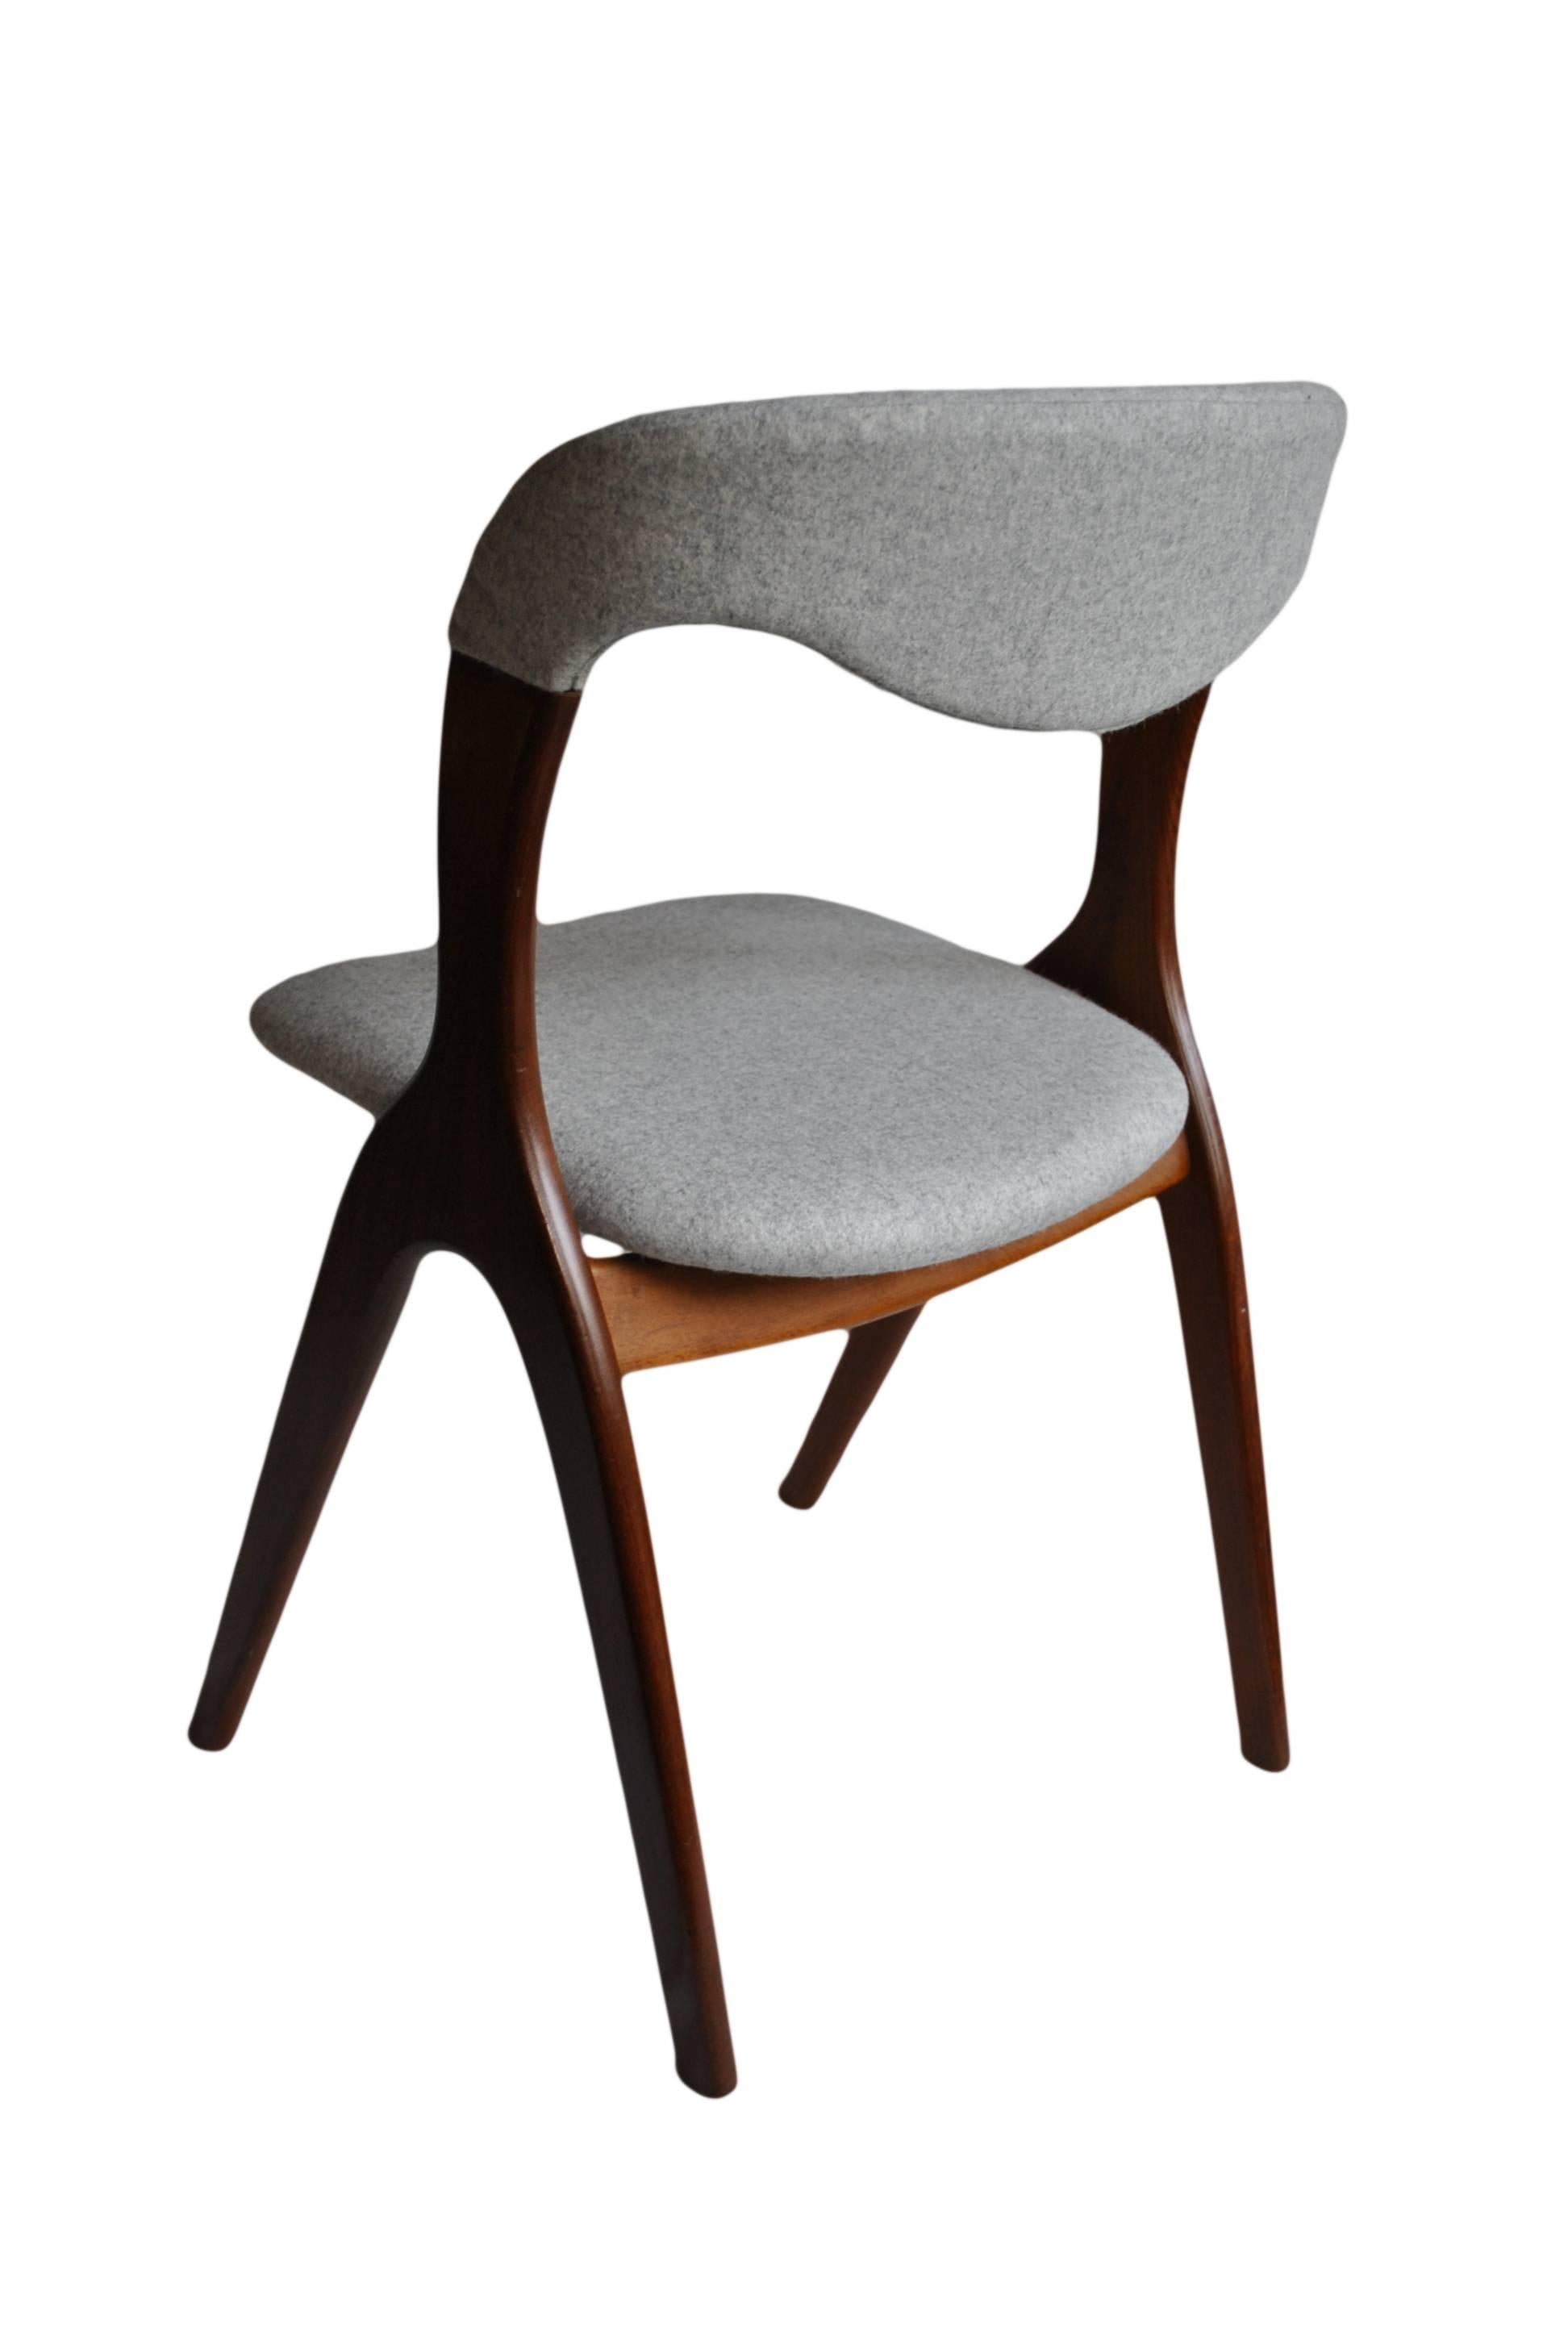 Danish Midcentury Dining Chairs, set of eight. Restored. 4